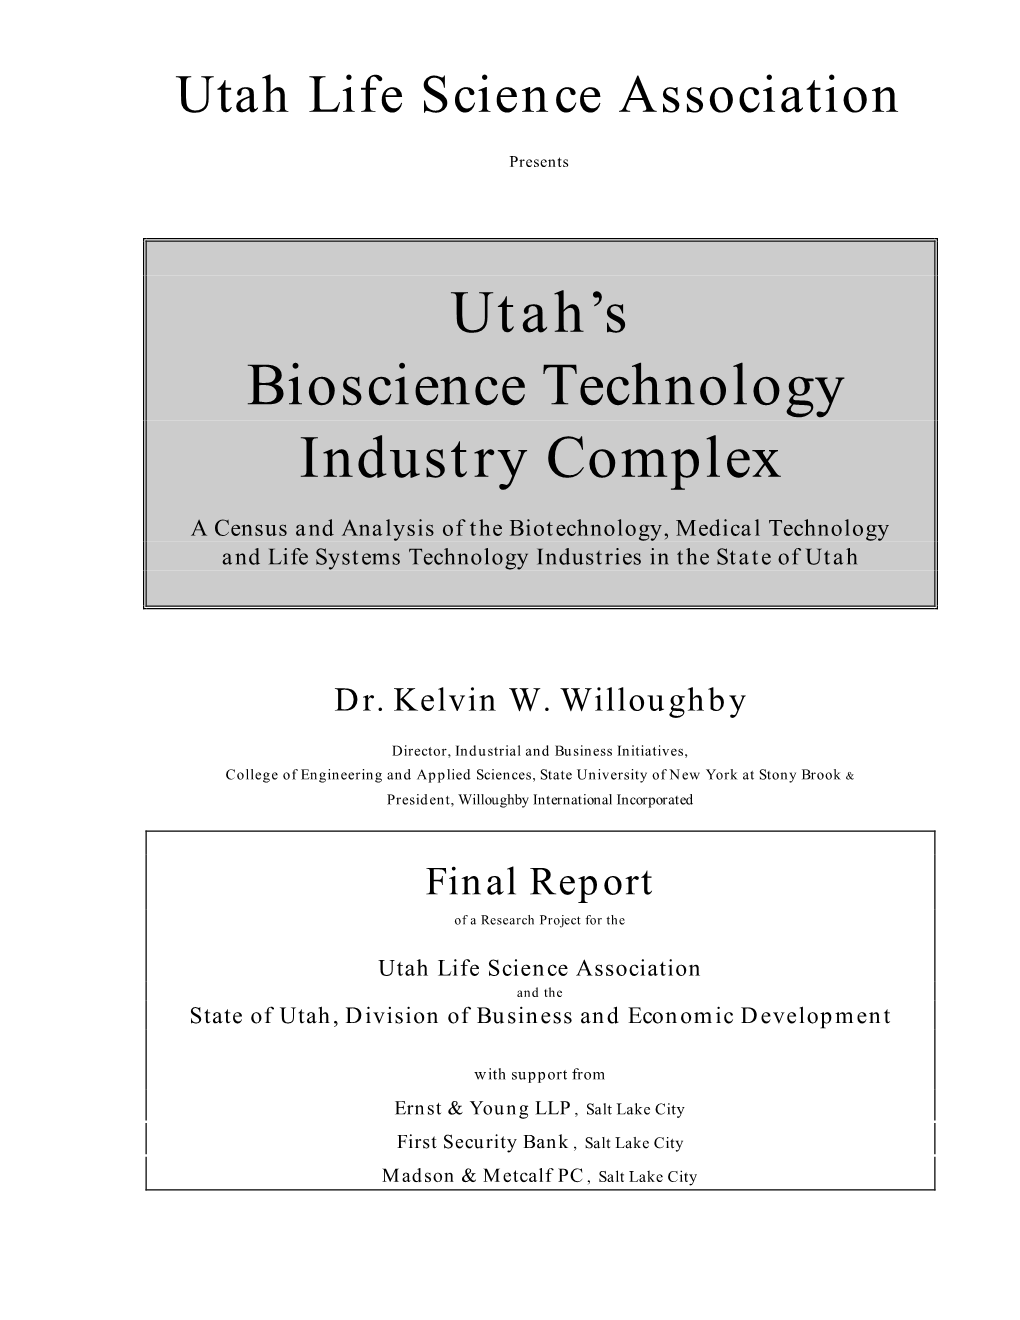 Utah's Bioscience Technology Industry Complex